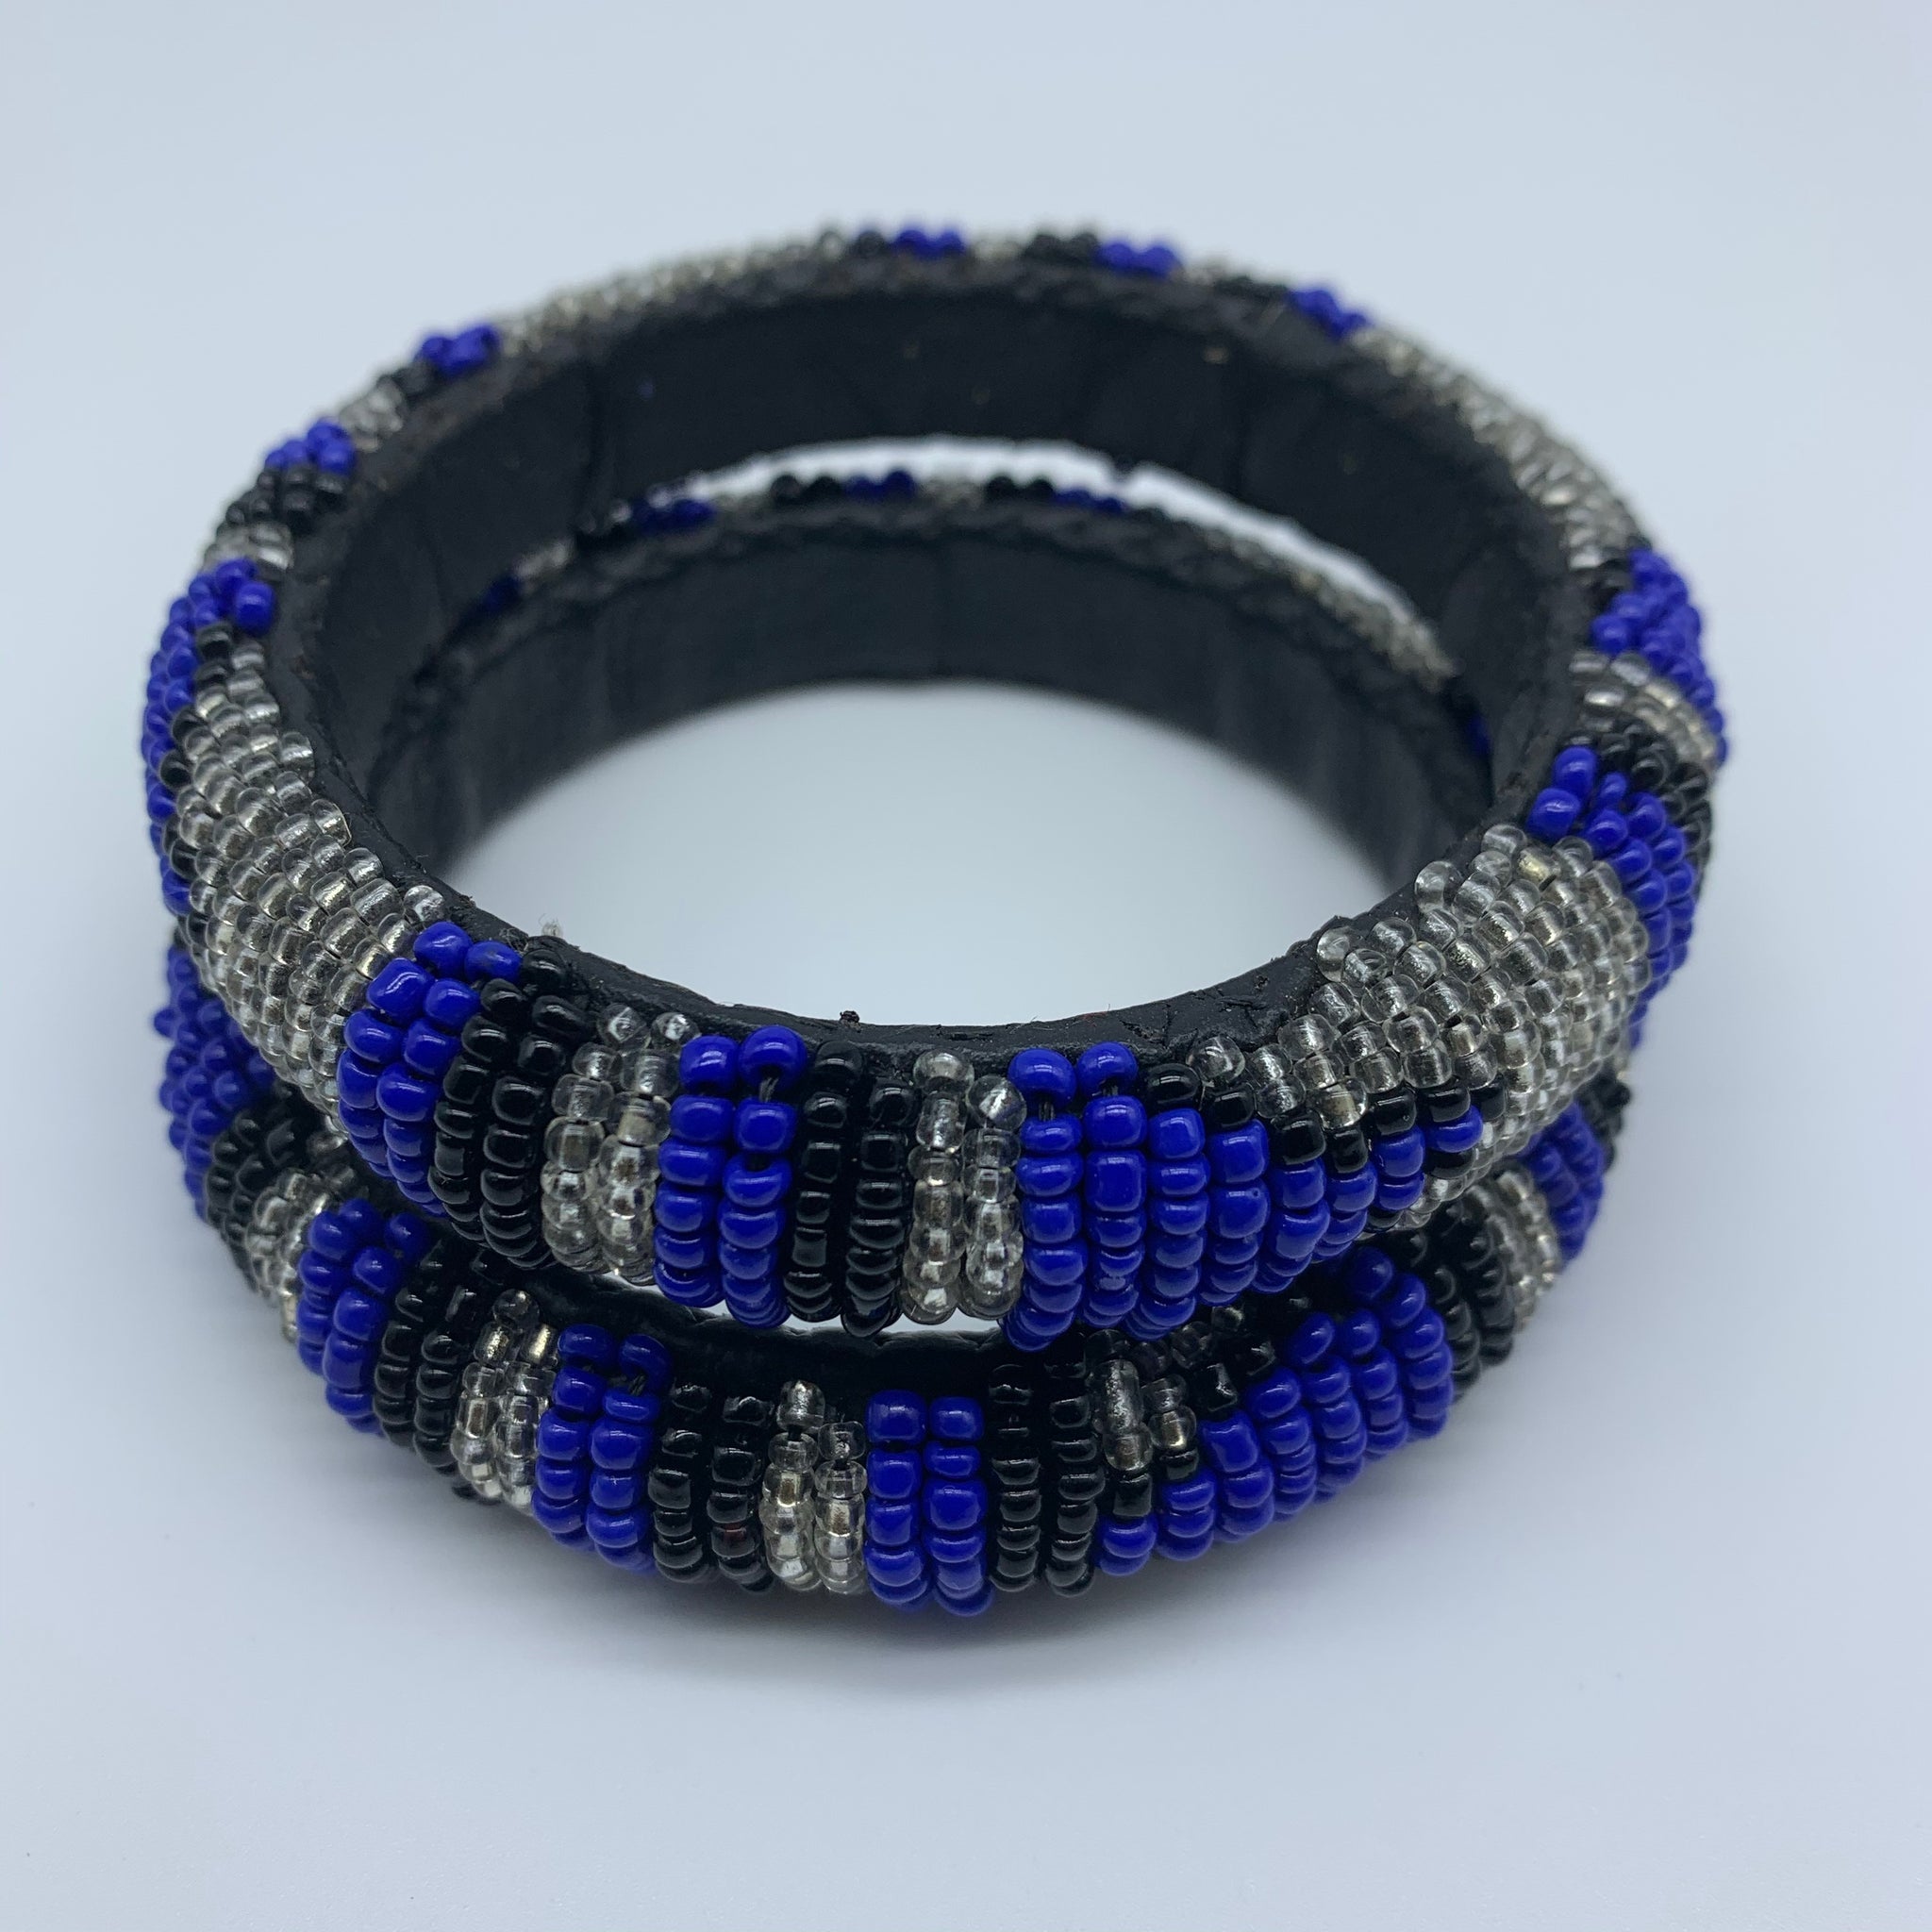 Beaded Bangle-Blue Silver Black Variation - Lillon Boutique